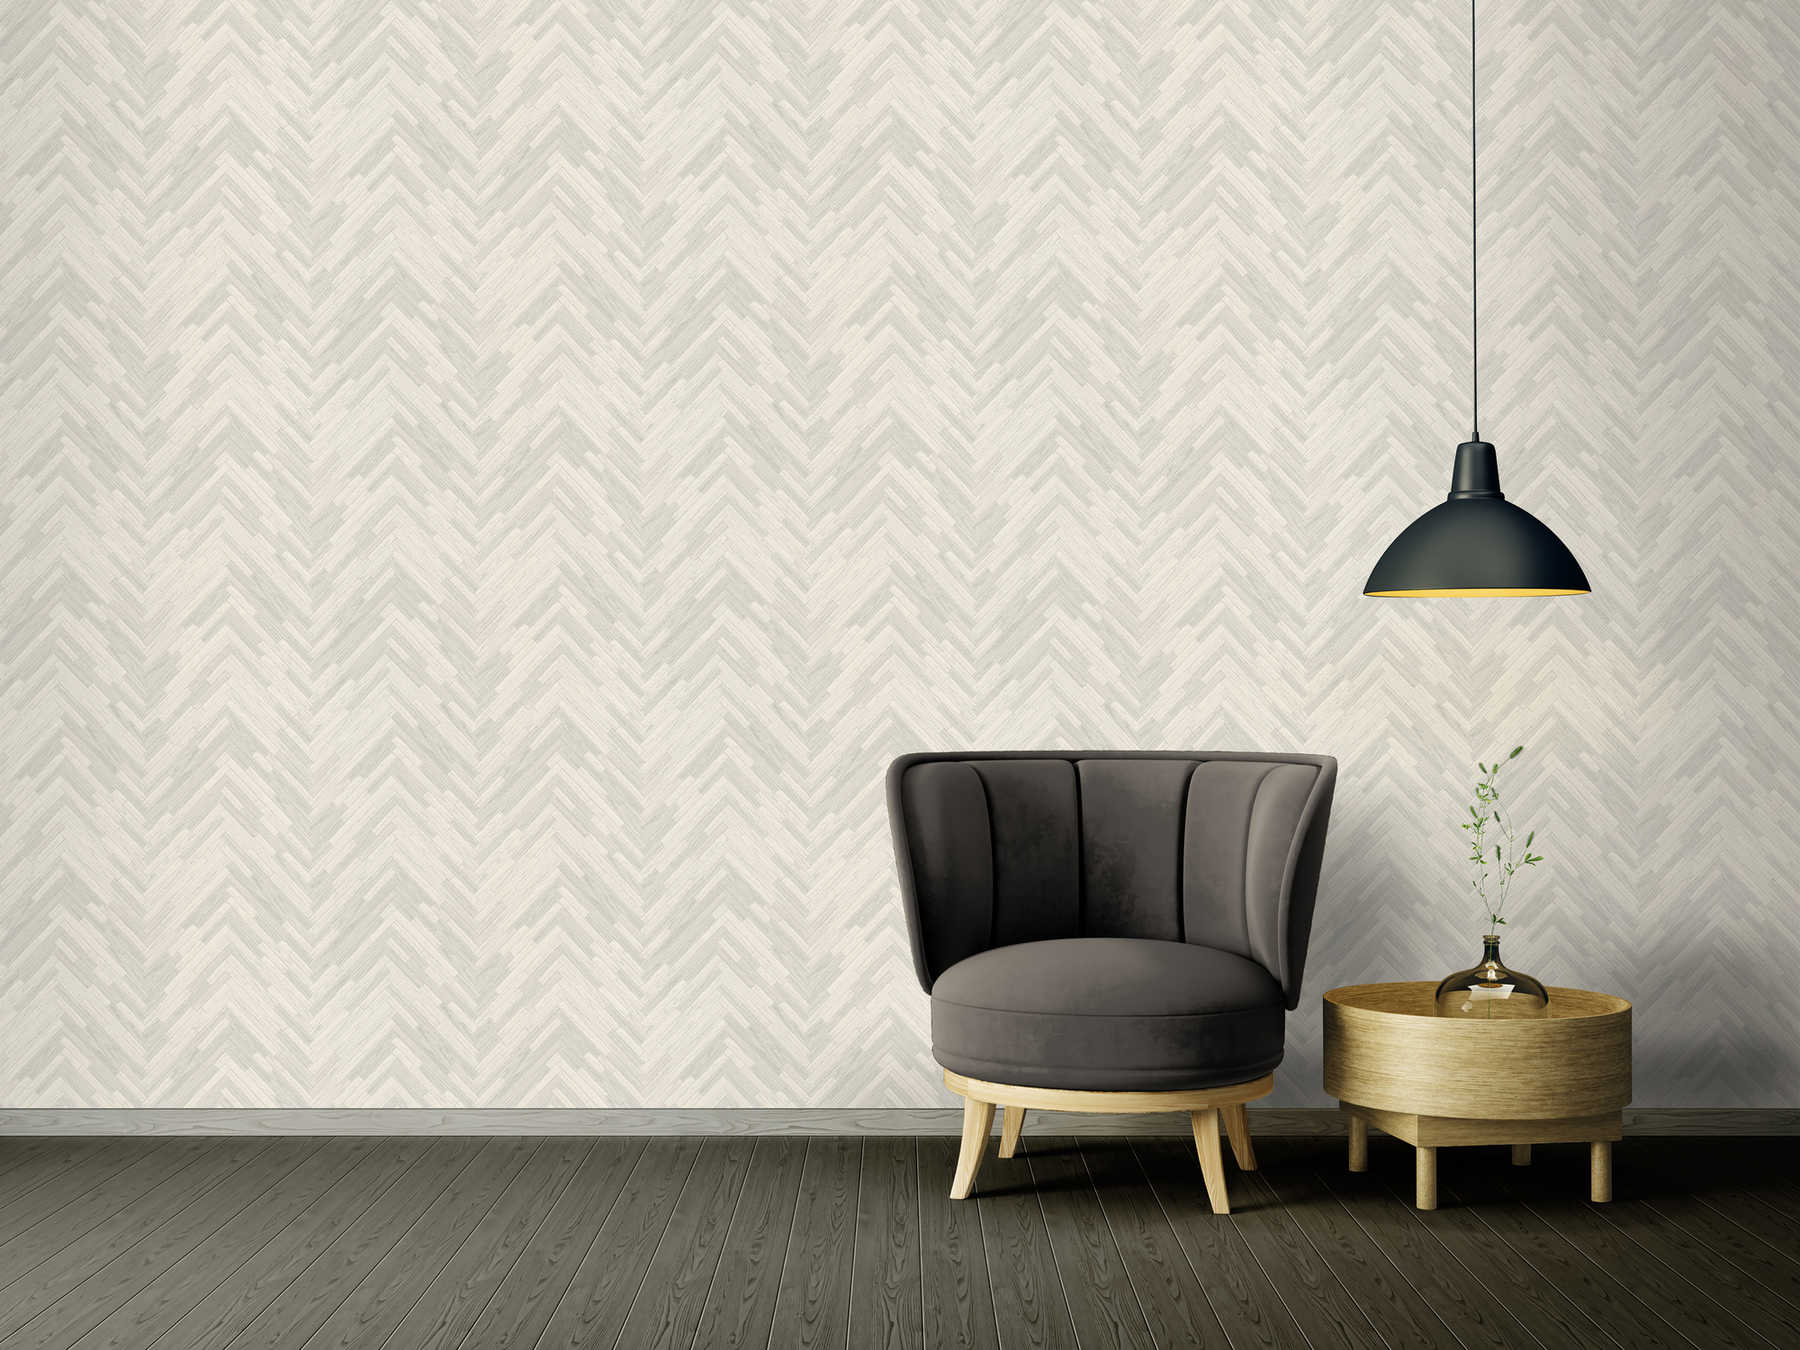             VERSACE Home Tapete elegante Holzoptik – Grau, Weiß
        